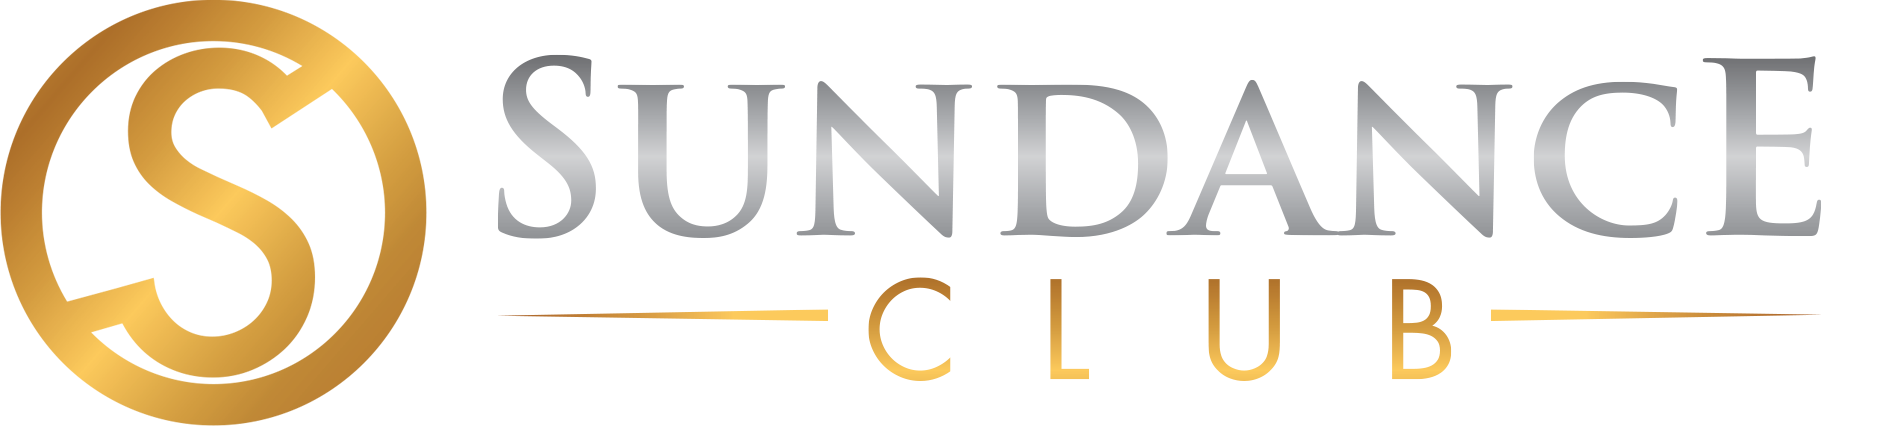 Sundance Club logo